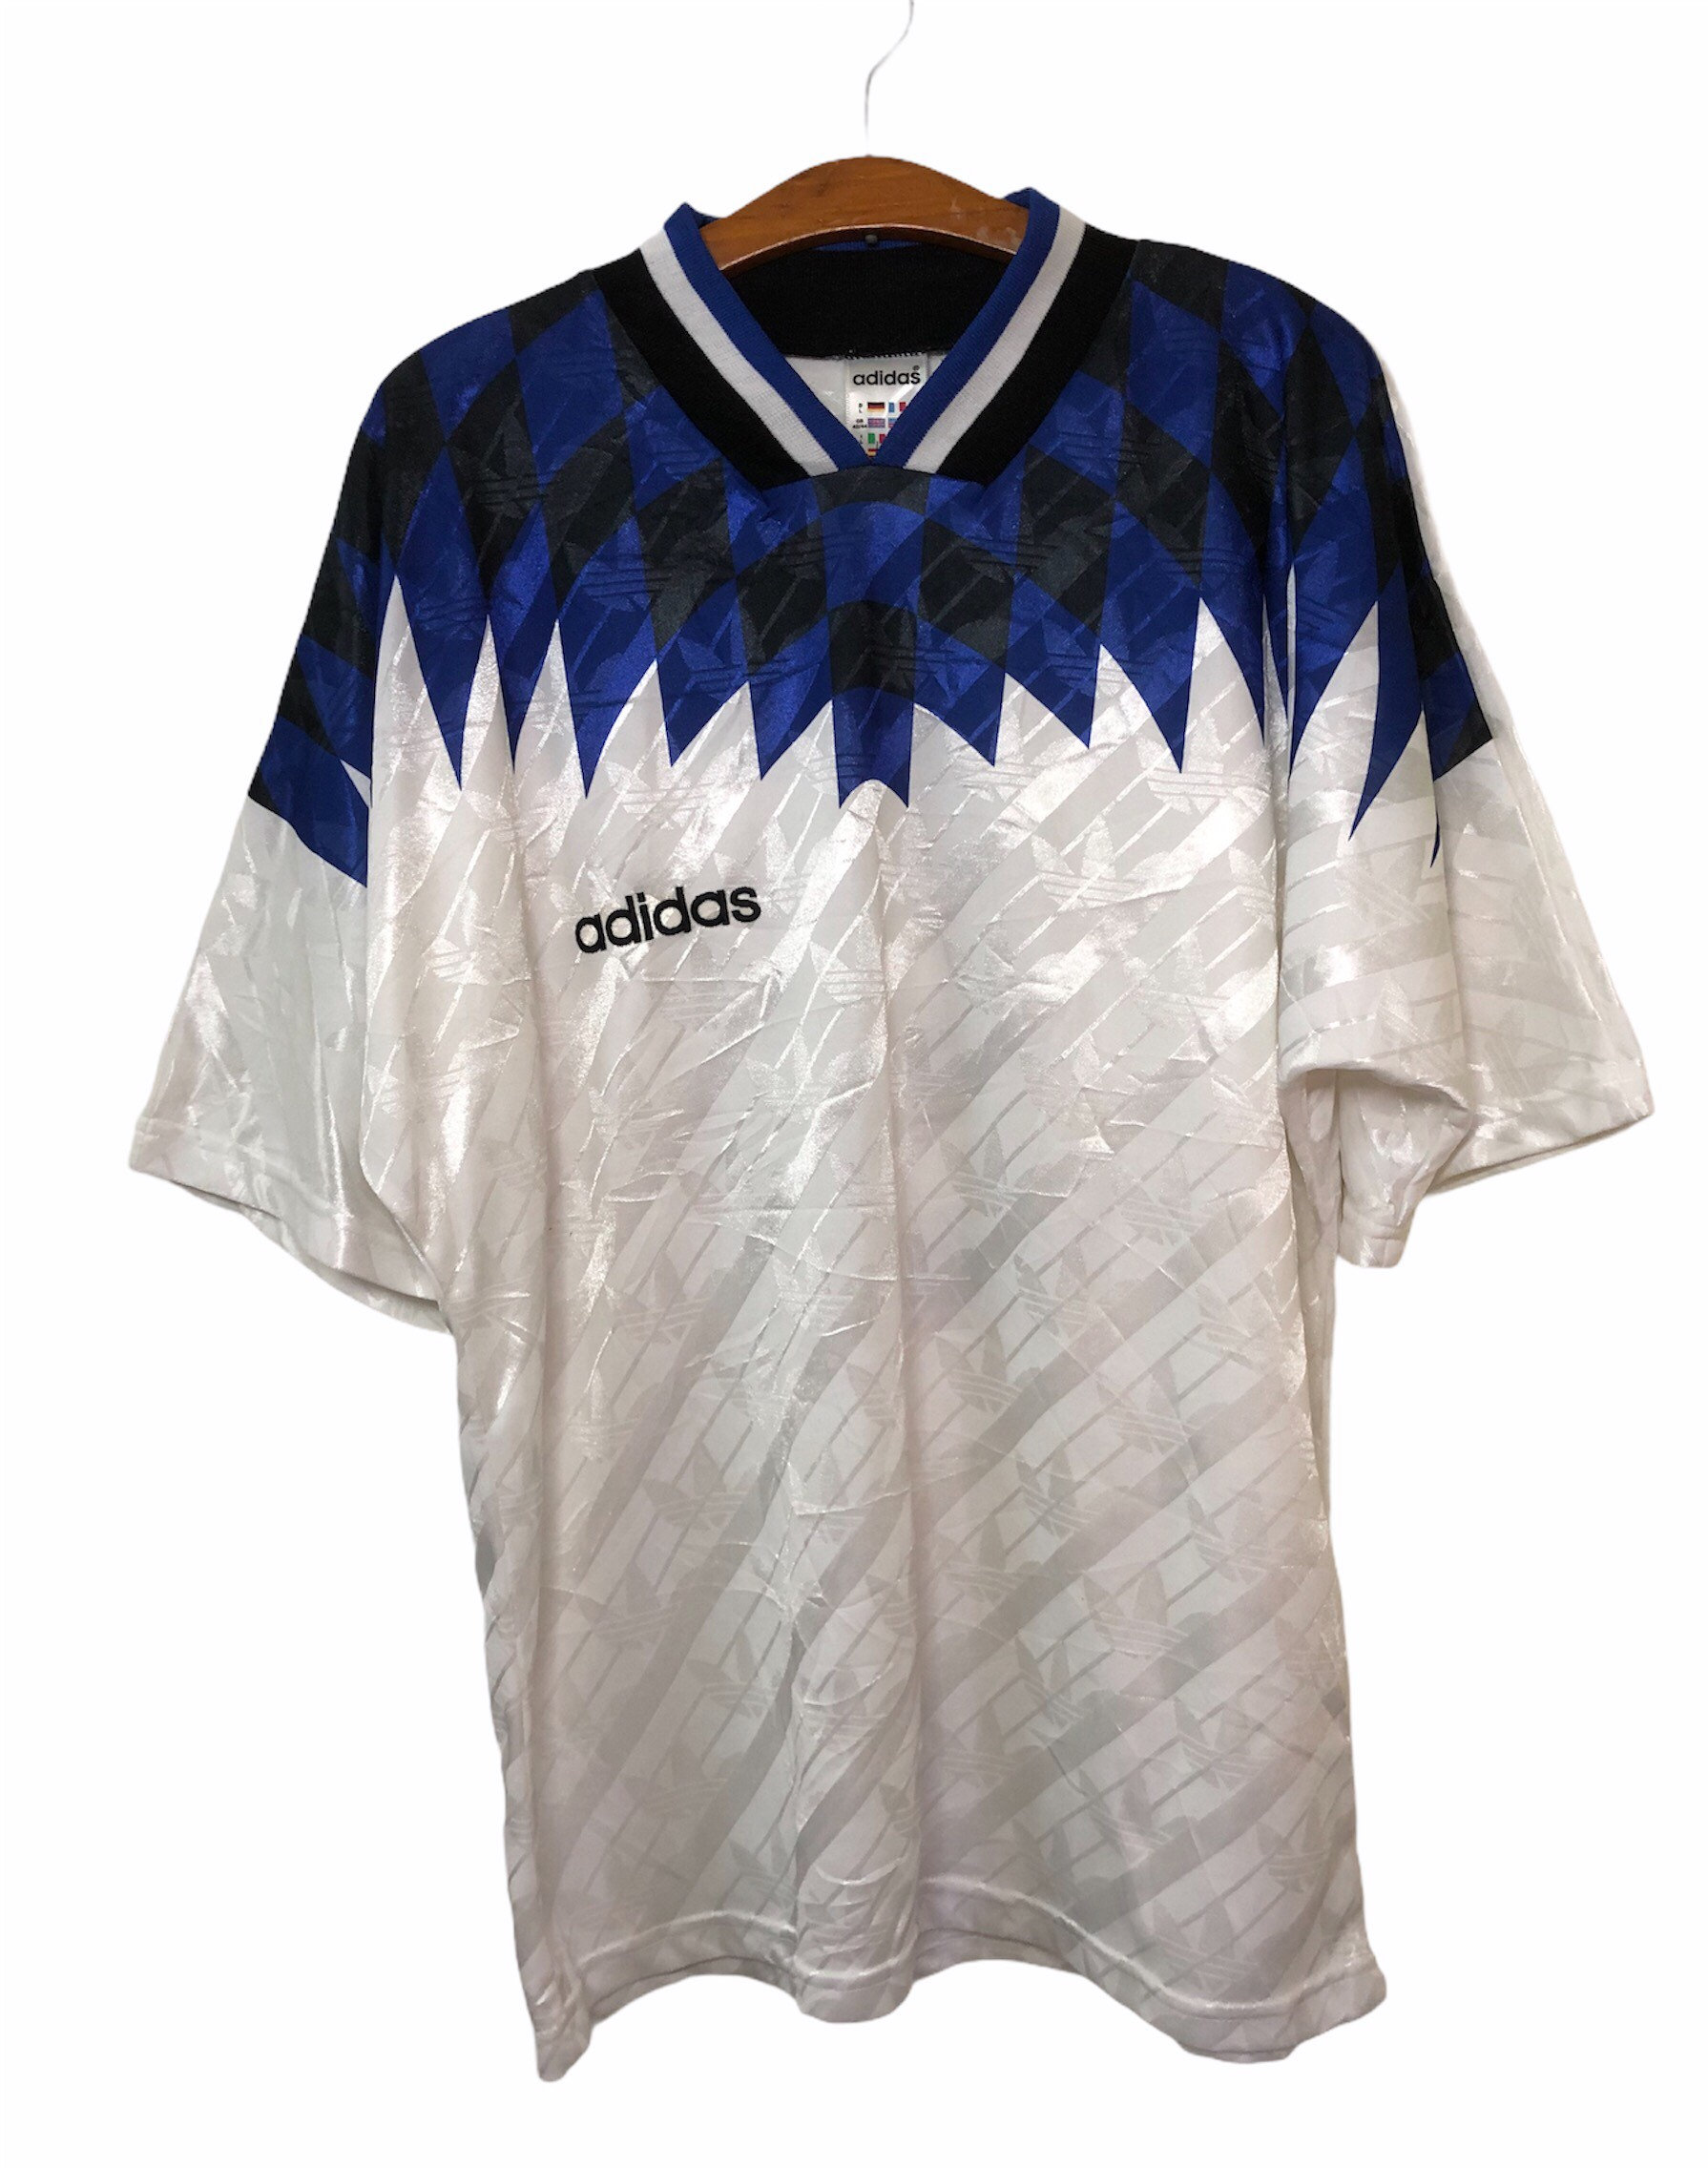 Adidas unveils seven 1990s retro jerseys 